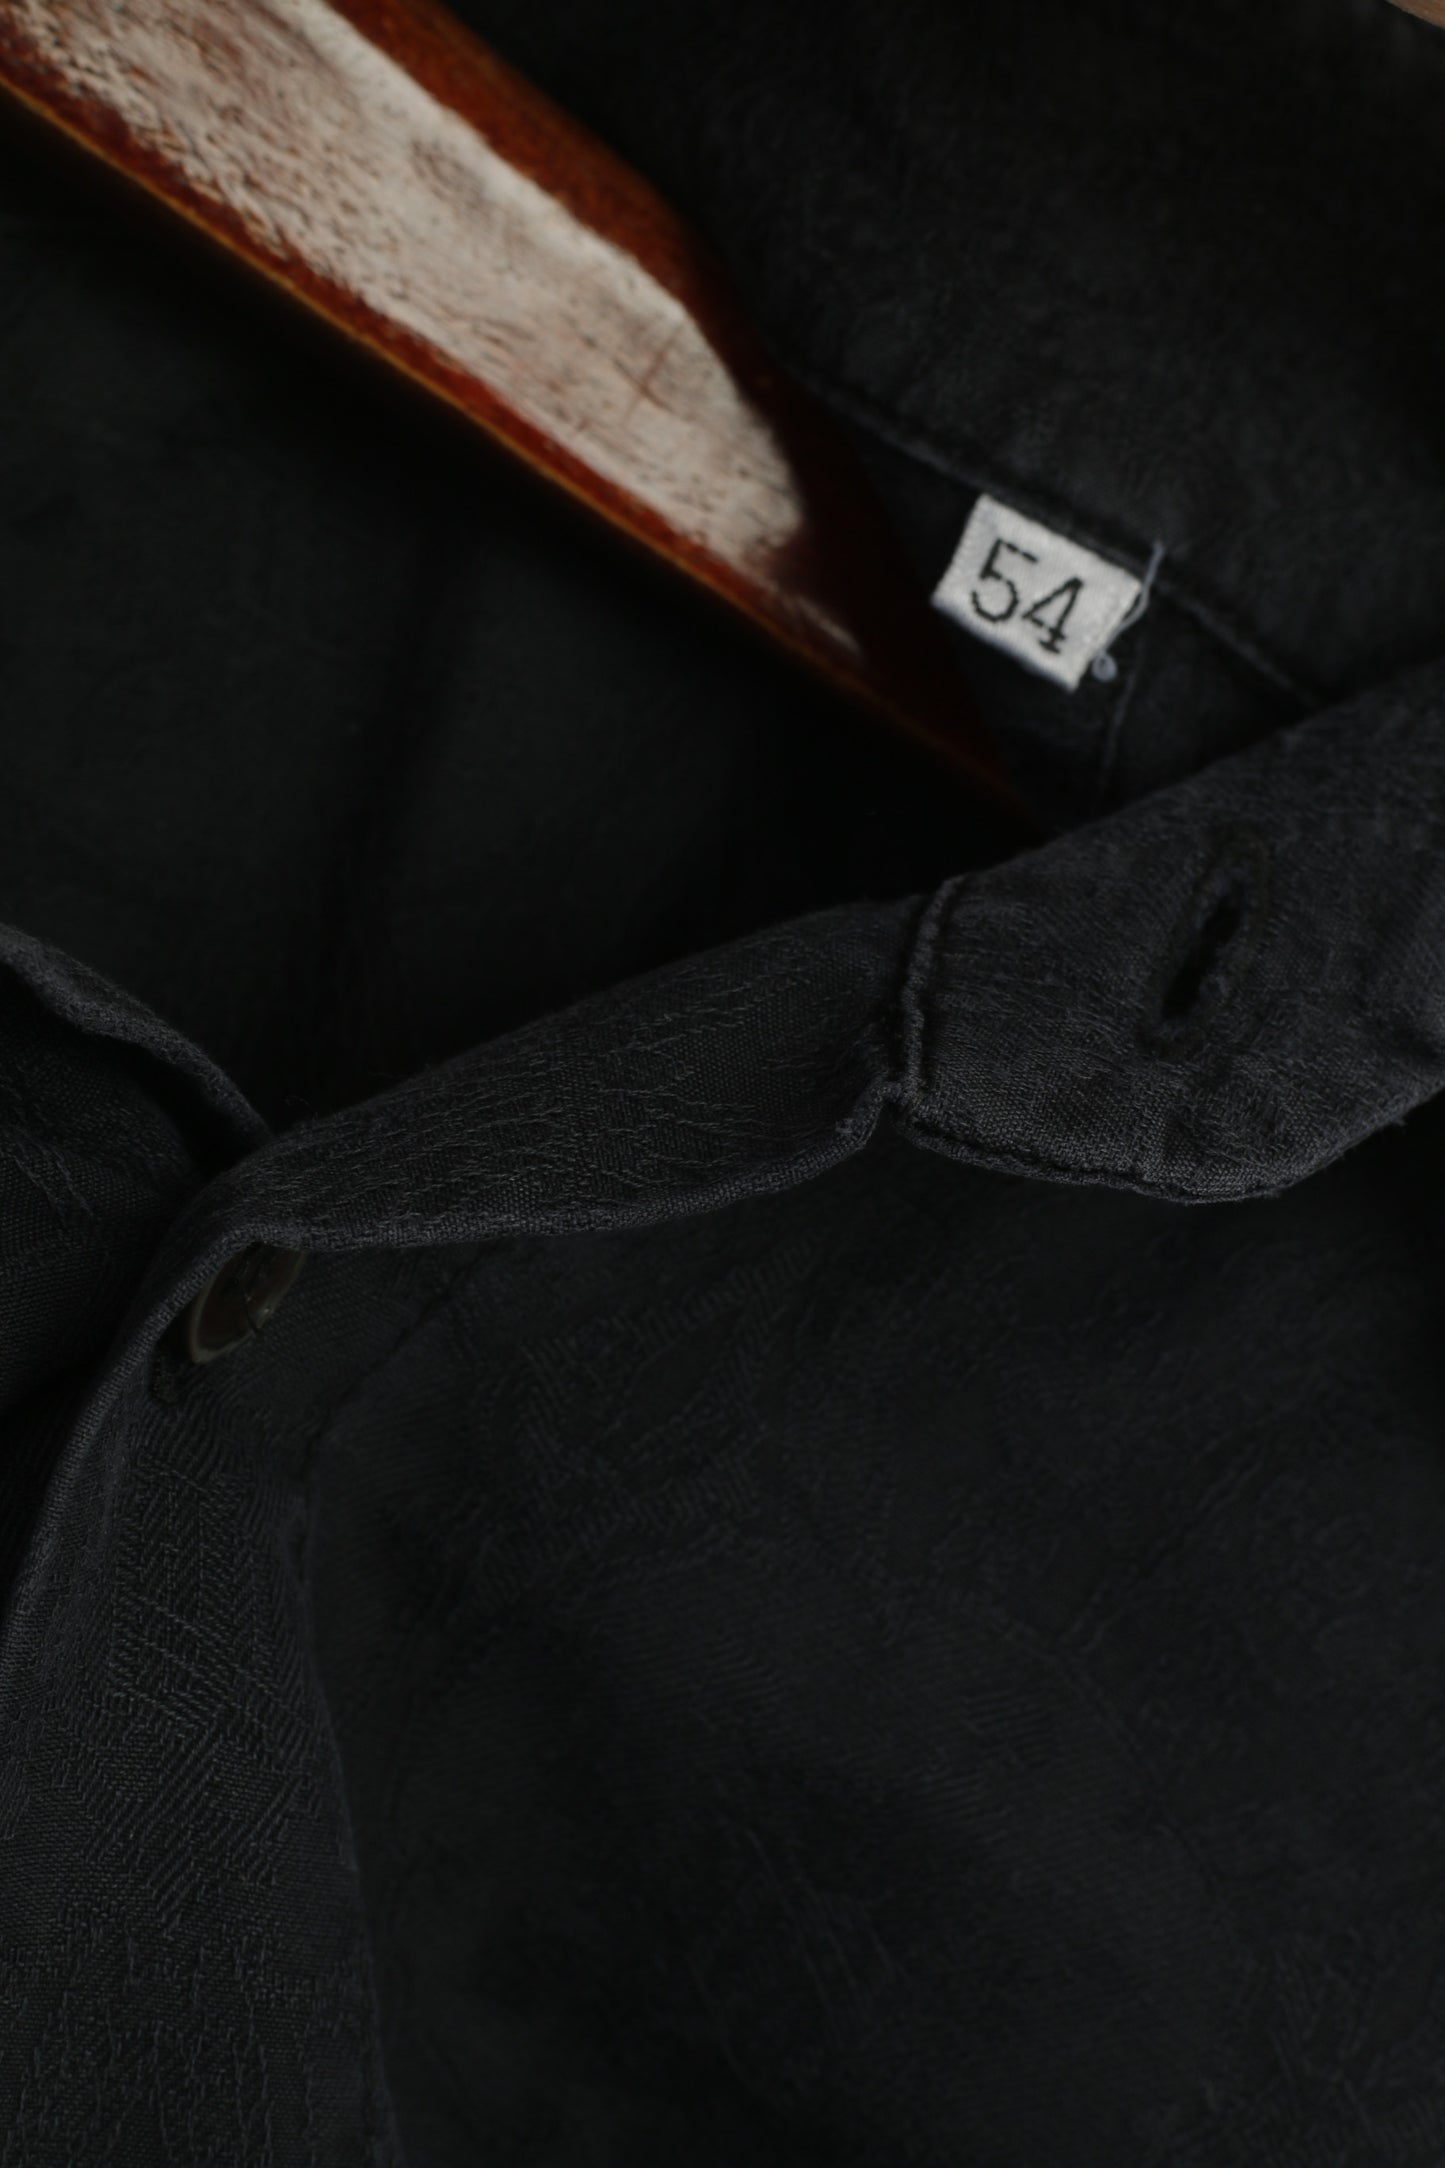 Gianni Versace Men 54 L Casual Shirt Black Cotton Vintage Long Sleeve Detailed Buttons Top